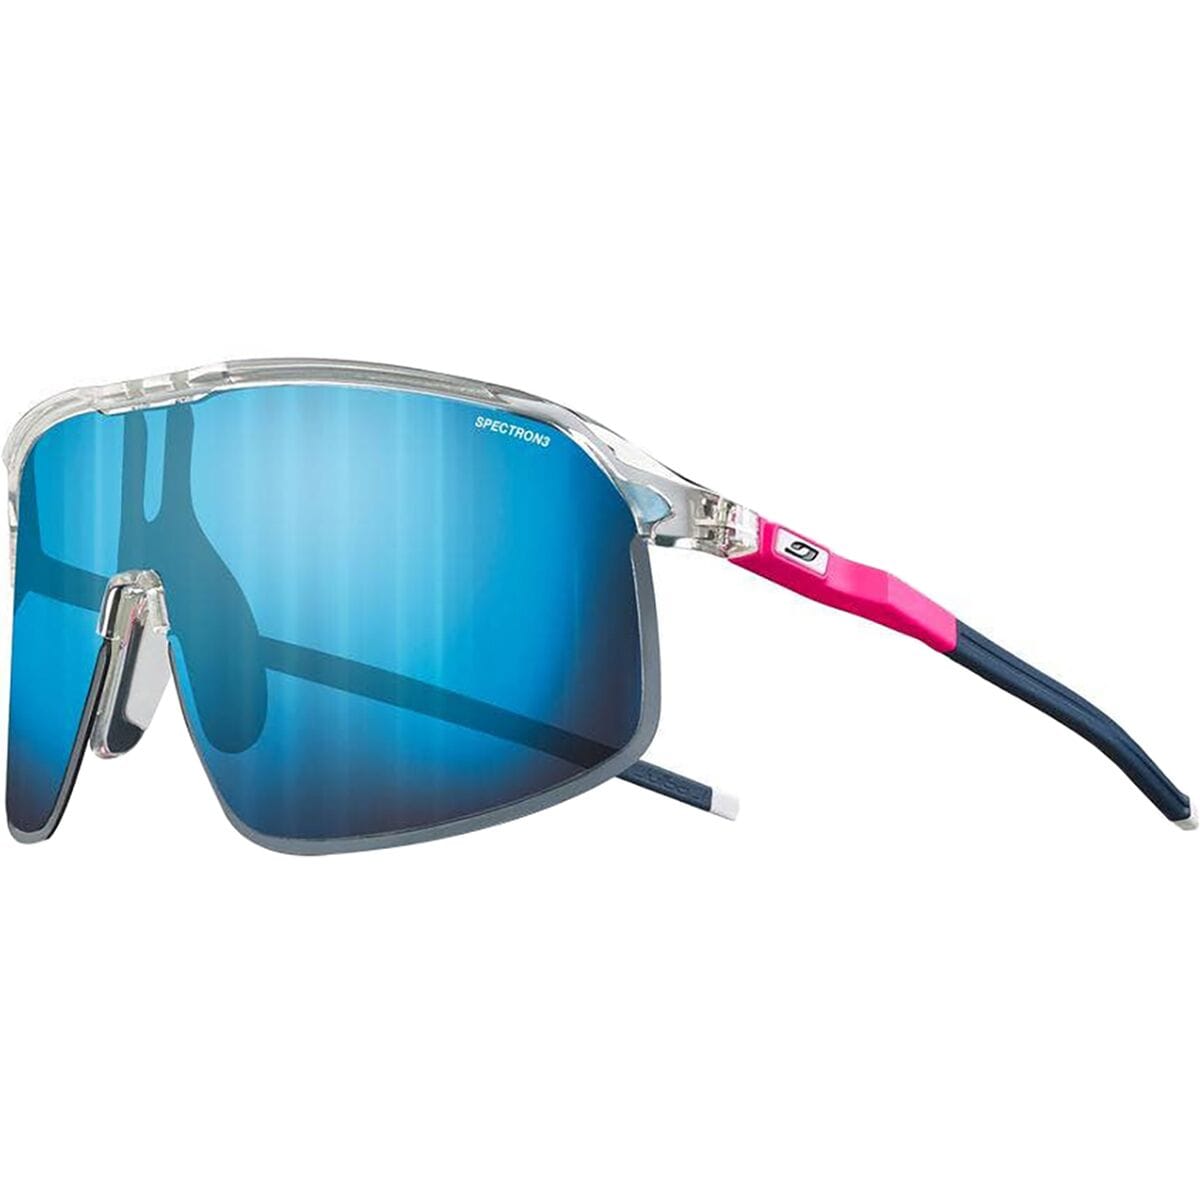 Julbo Density Spectron 3 Sunglasses Crystal/Pink/Blue, One Size - Men's